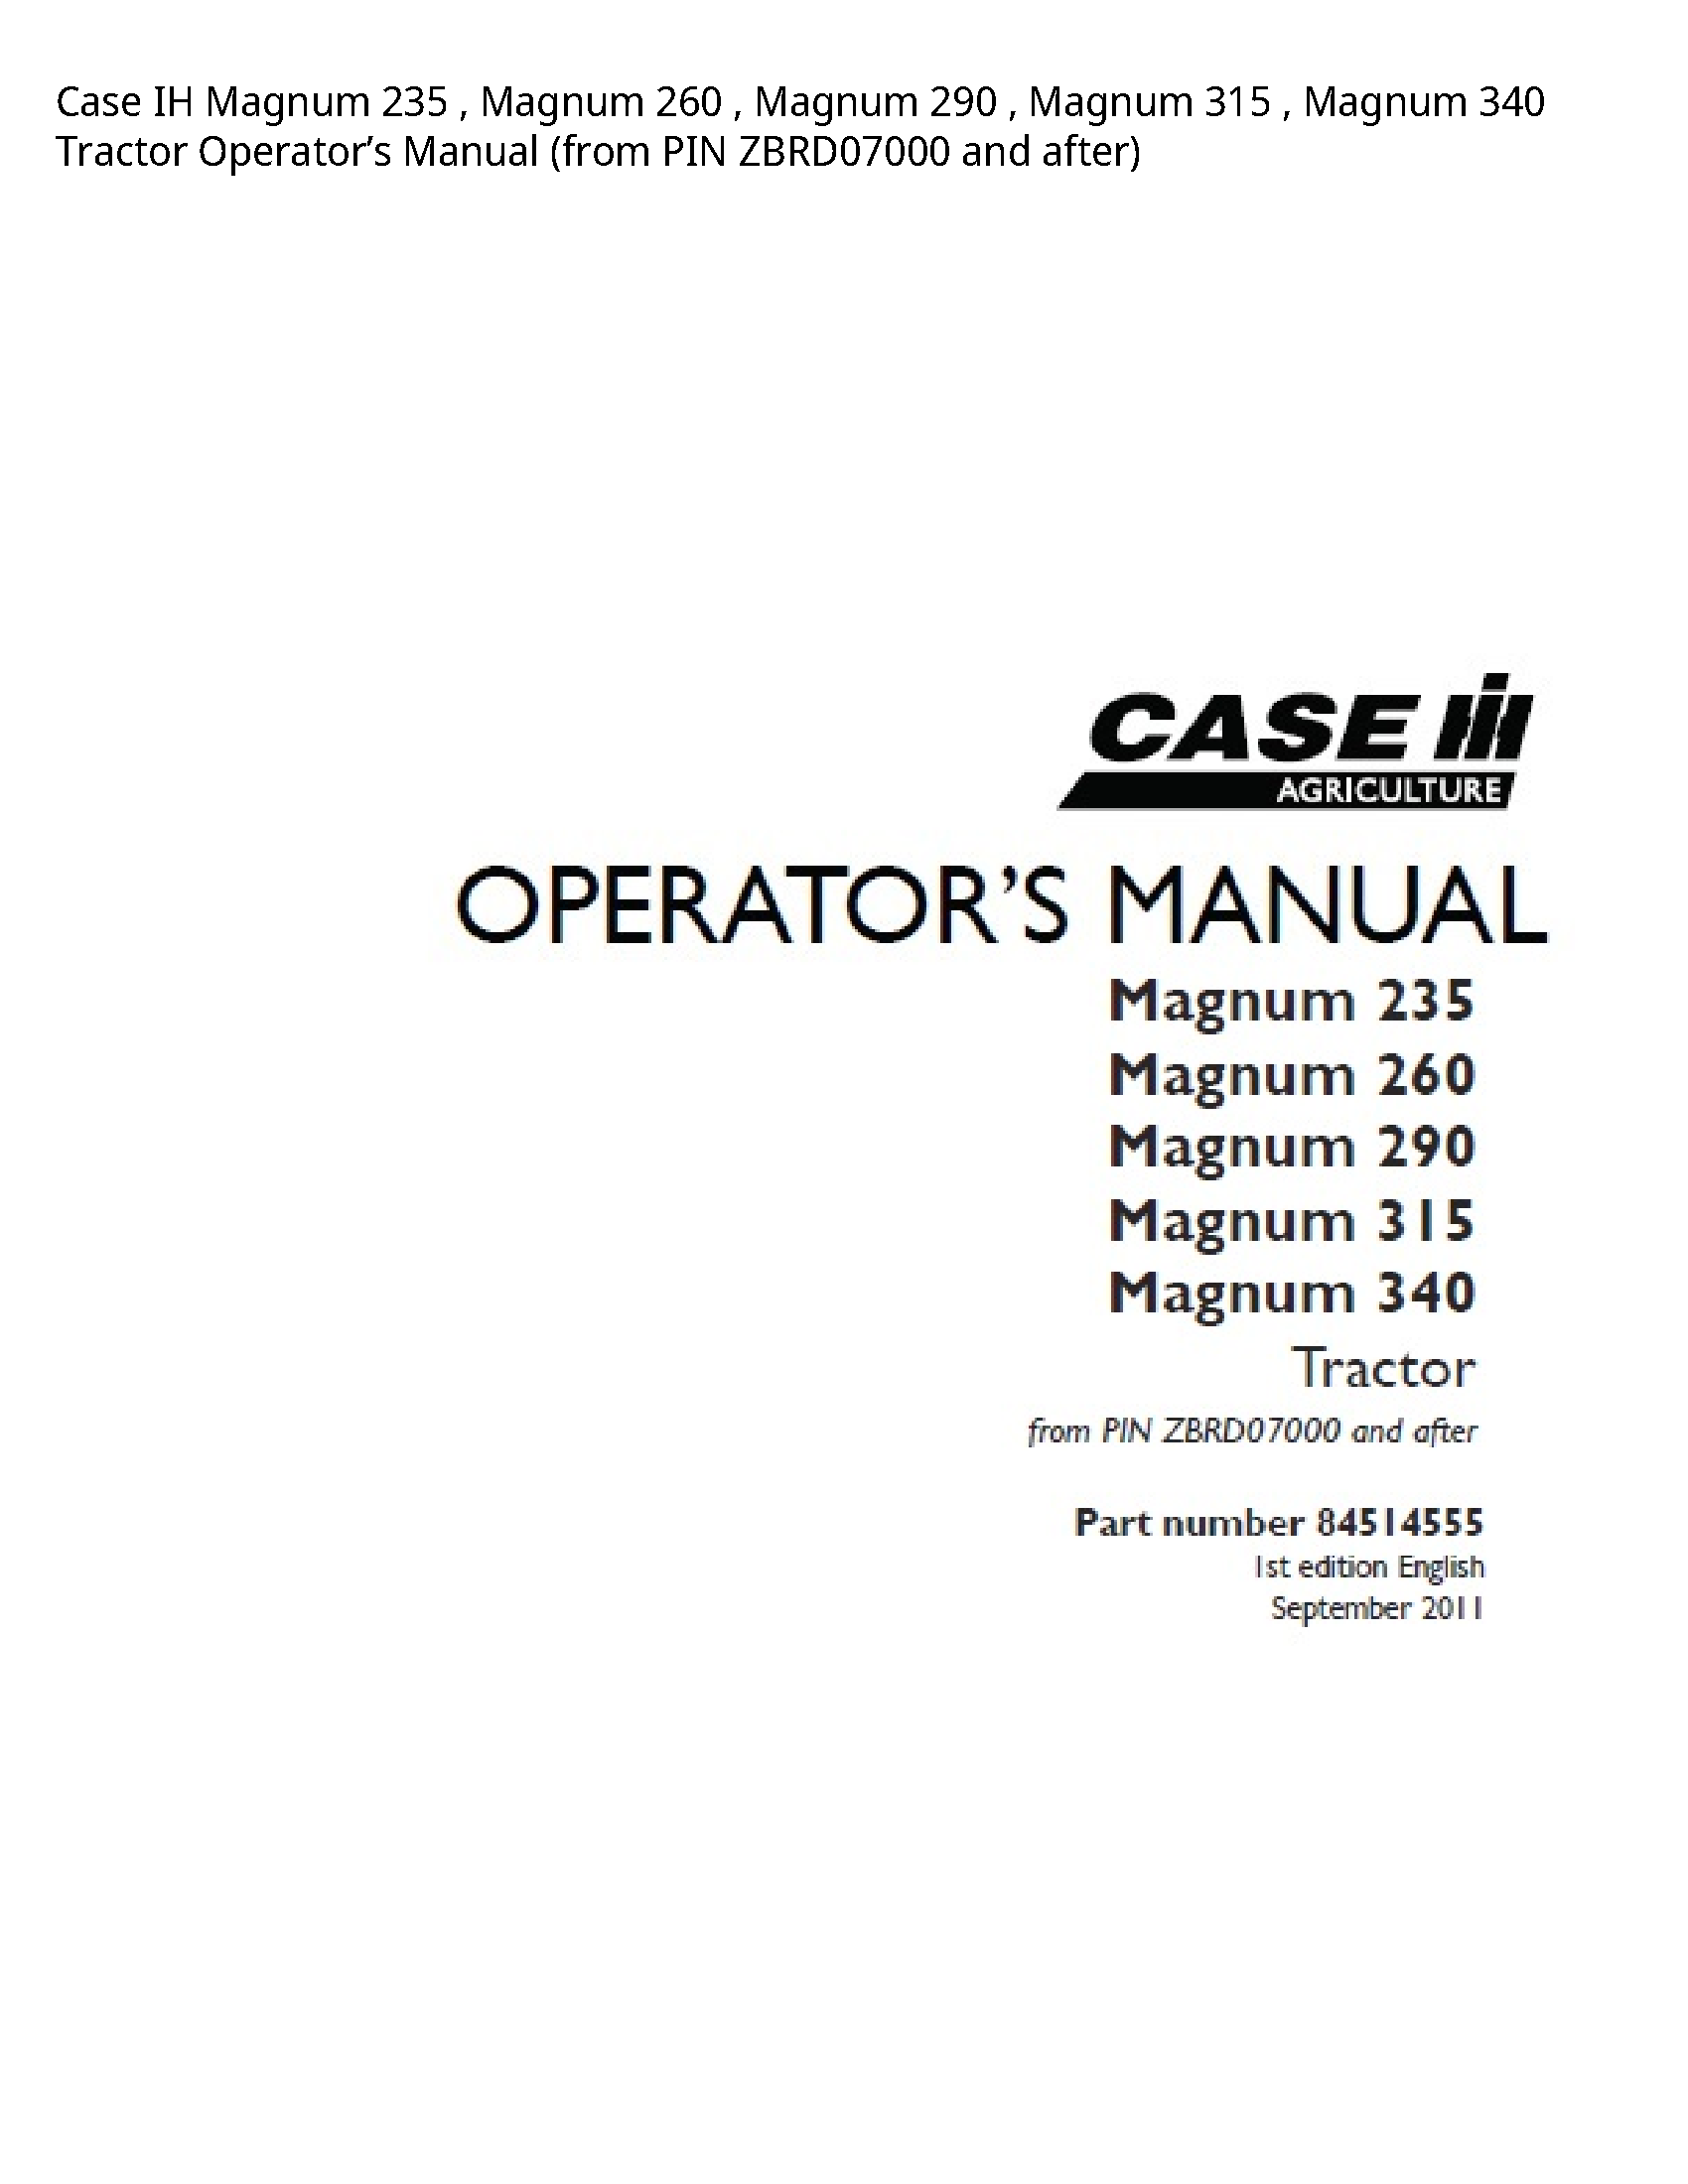 Case/Case IH 235 IH Magnum Magnum Magnum Magnum Magnum Tractor Operator’s manual